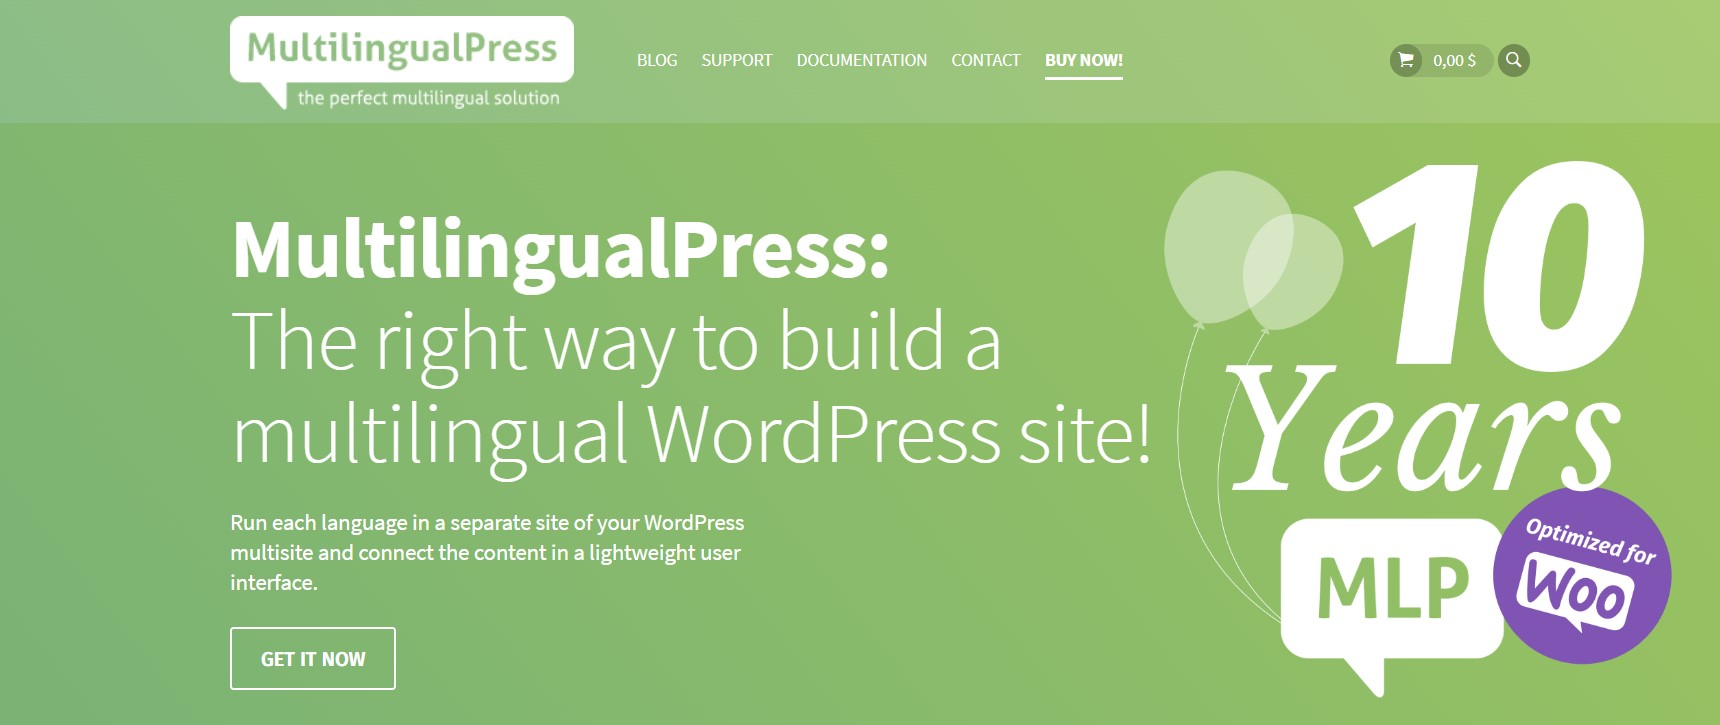 Multilingualpress Helps In Building A Mutilingual Wordpress Site